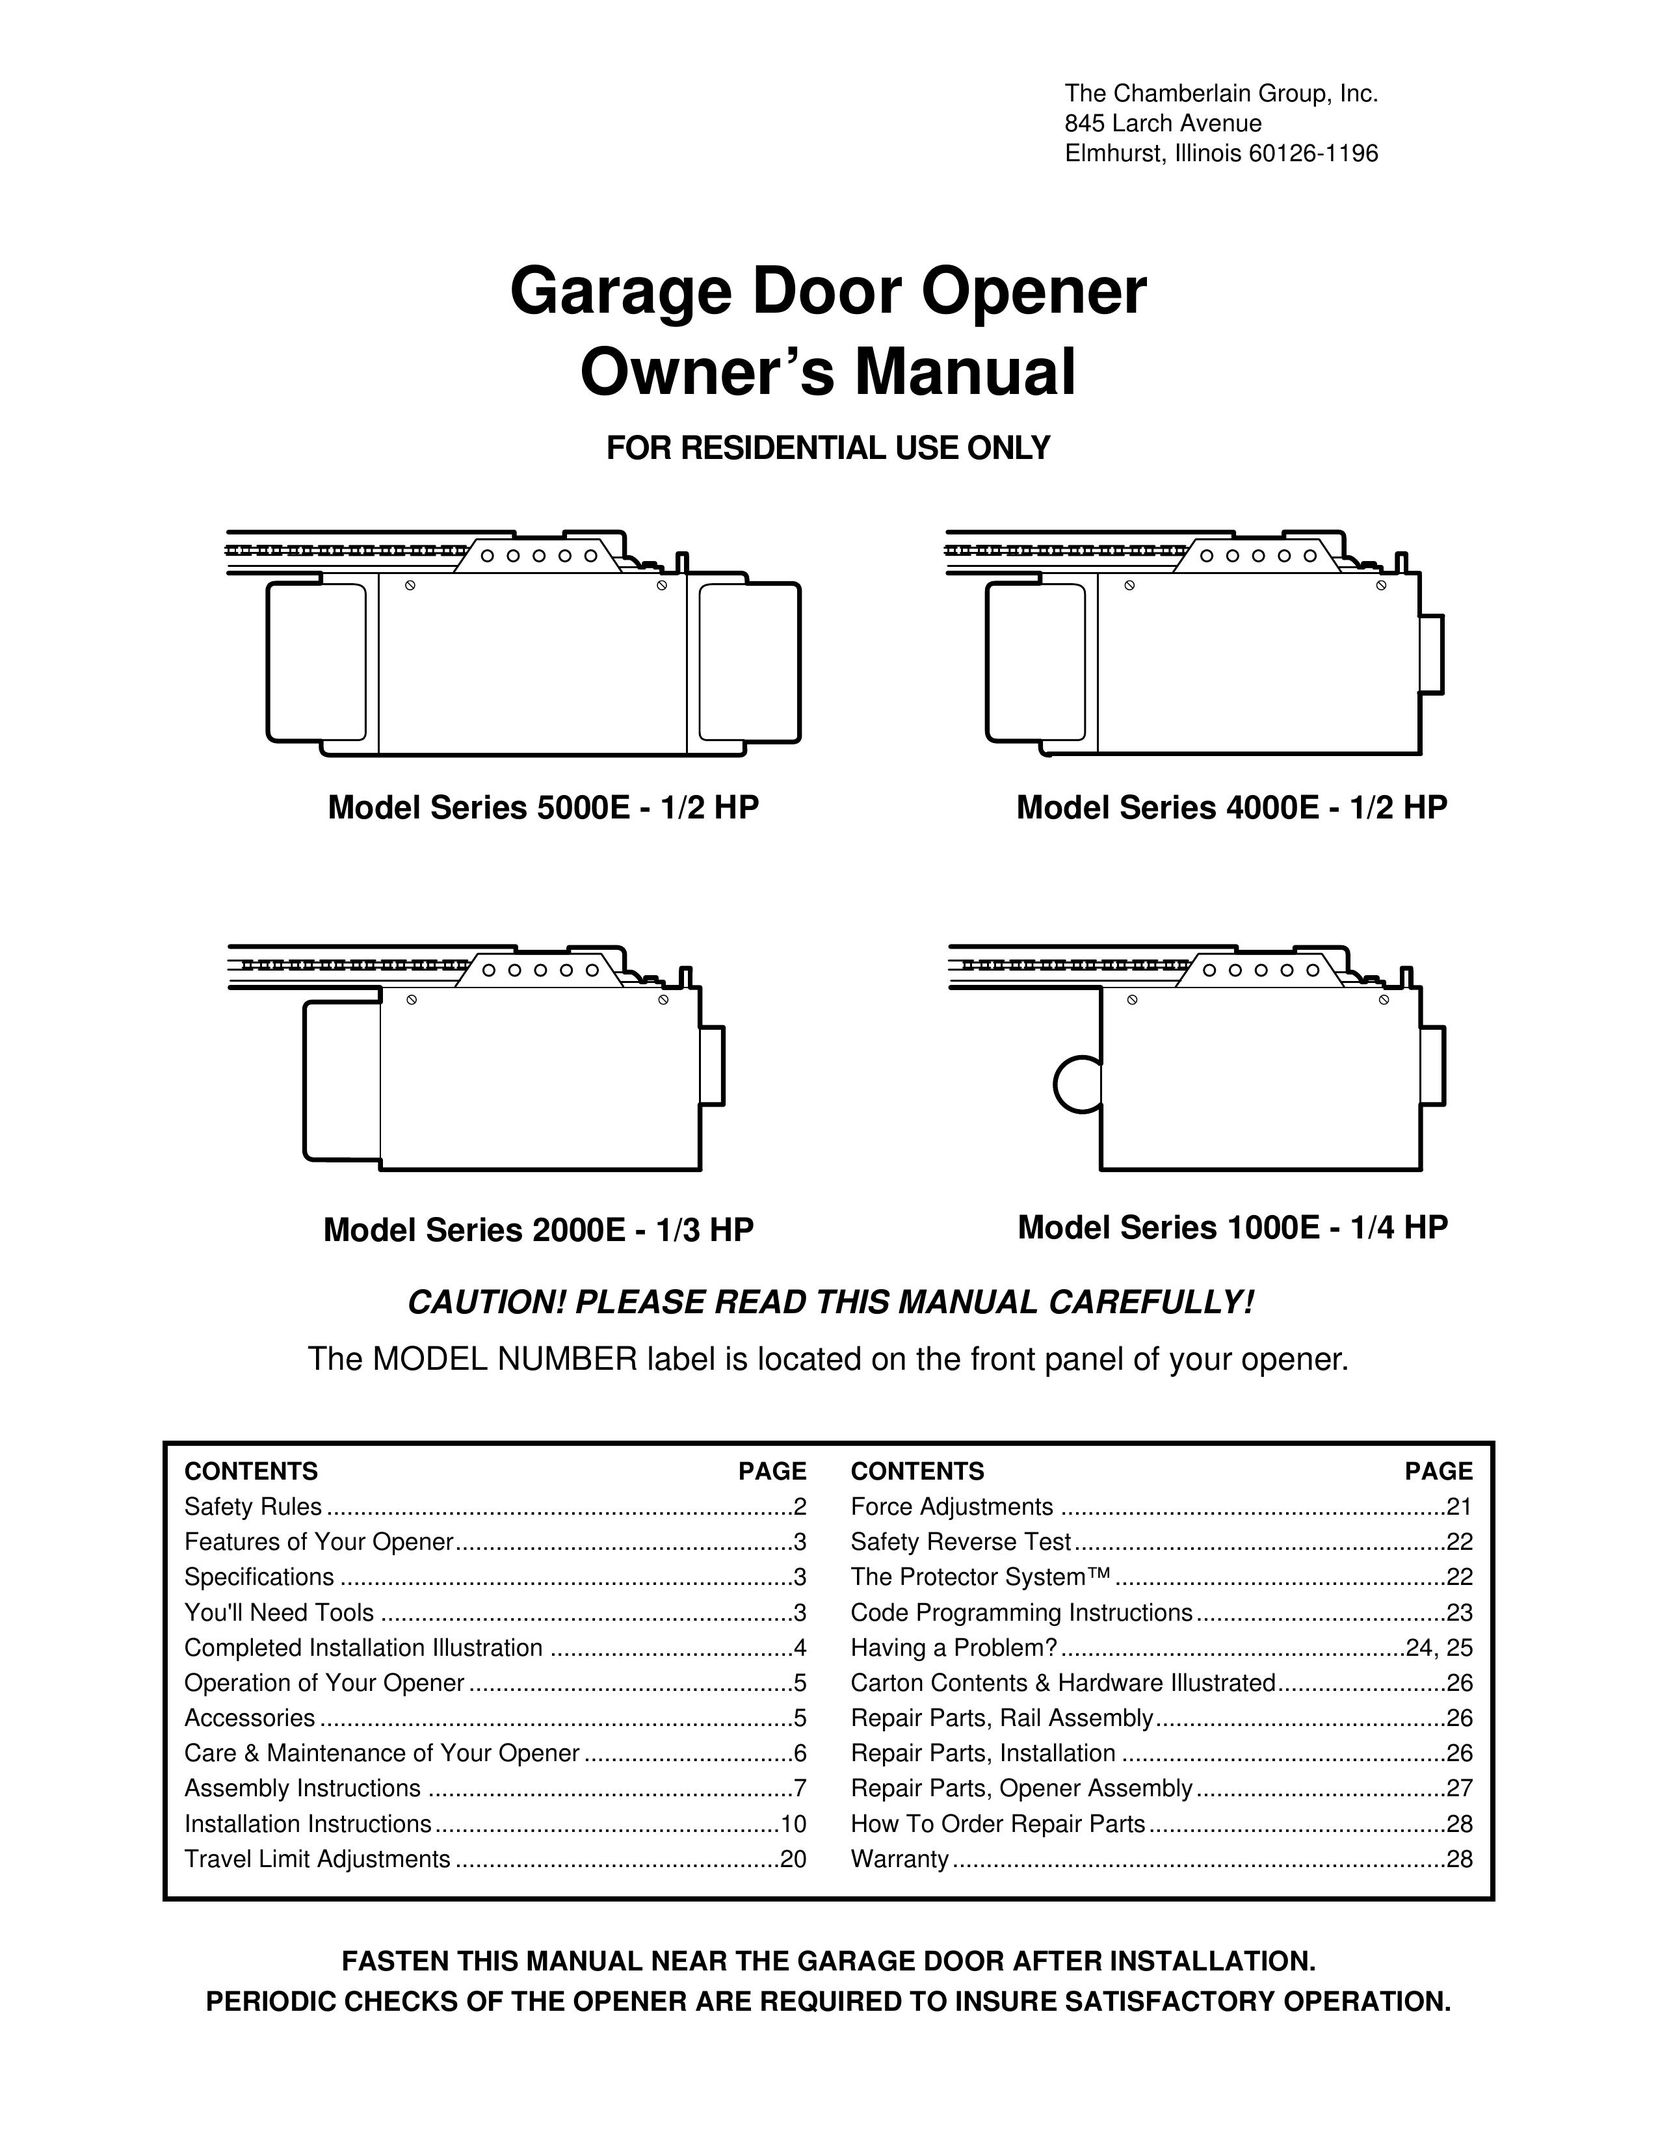 Chamberlain 1000E - 1/4 HP Garage Door Opener User Manual (Page 1)